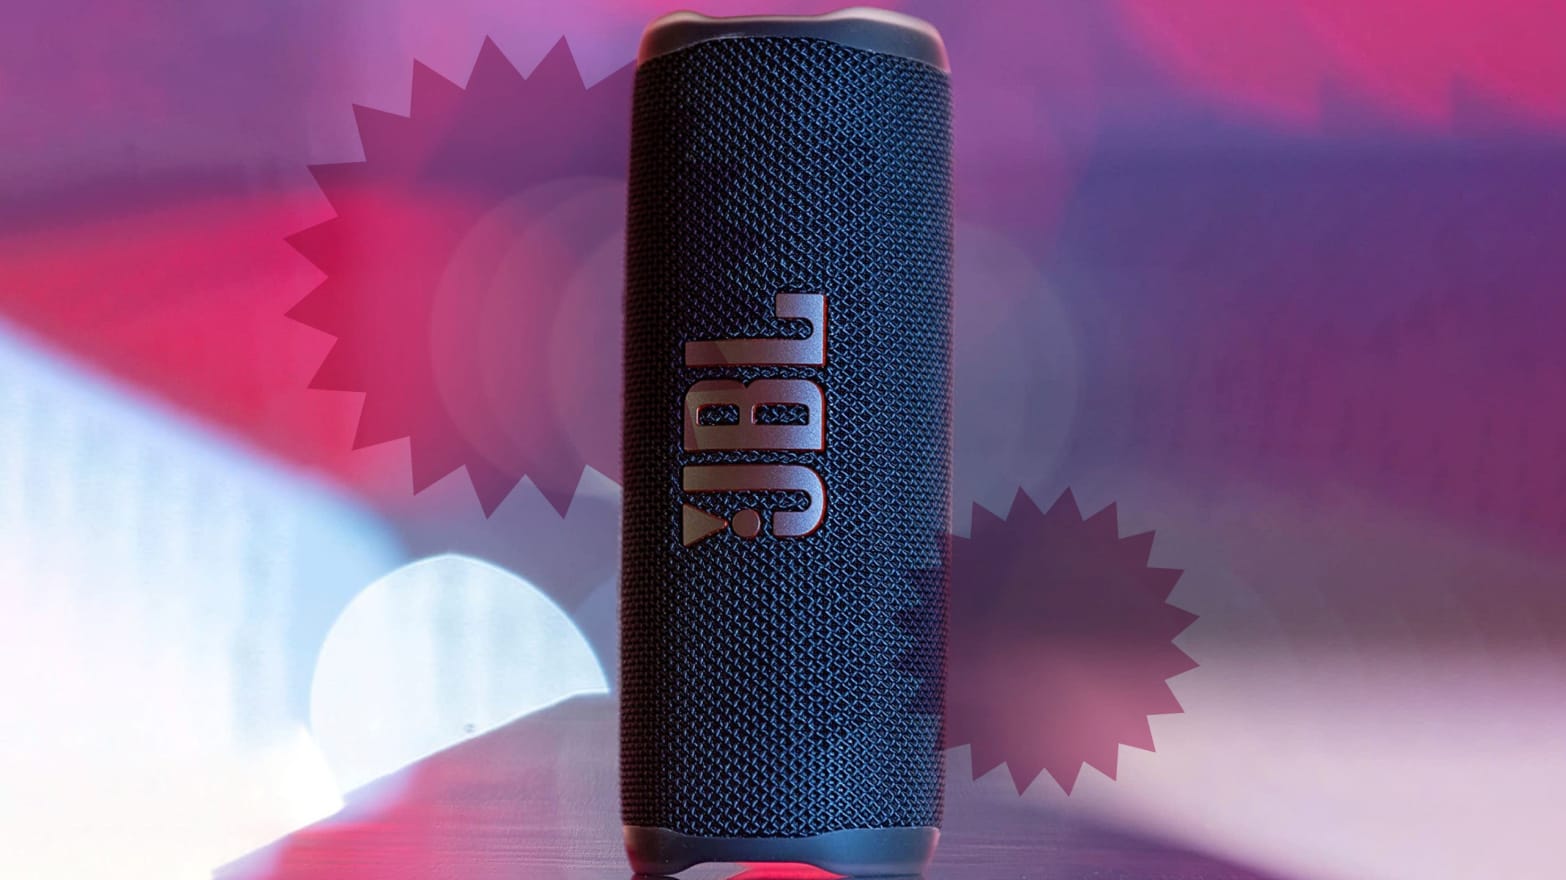 Shop Best JBL Bluetooth Speakers on Sale at